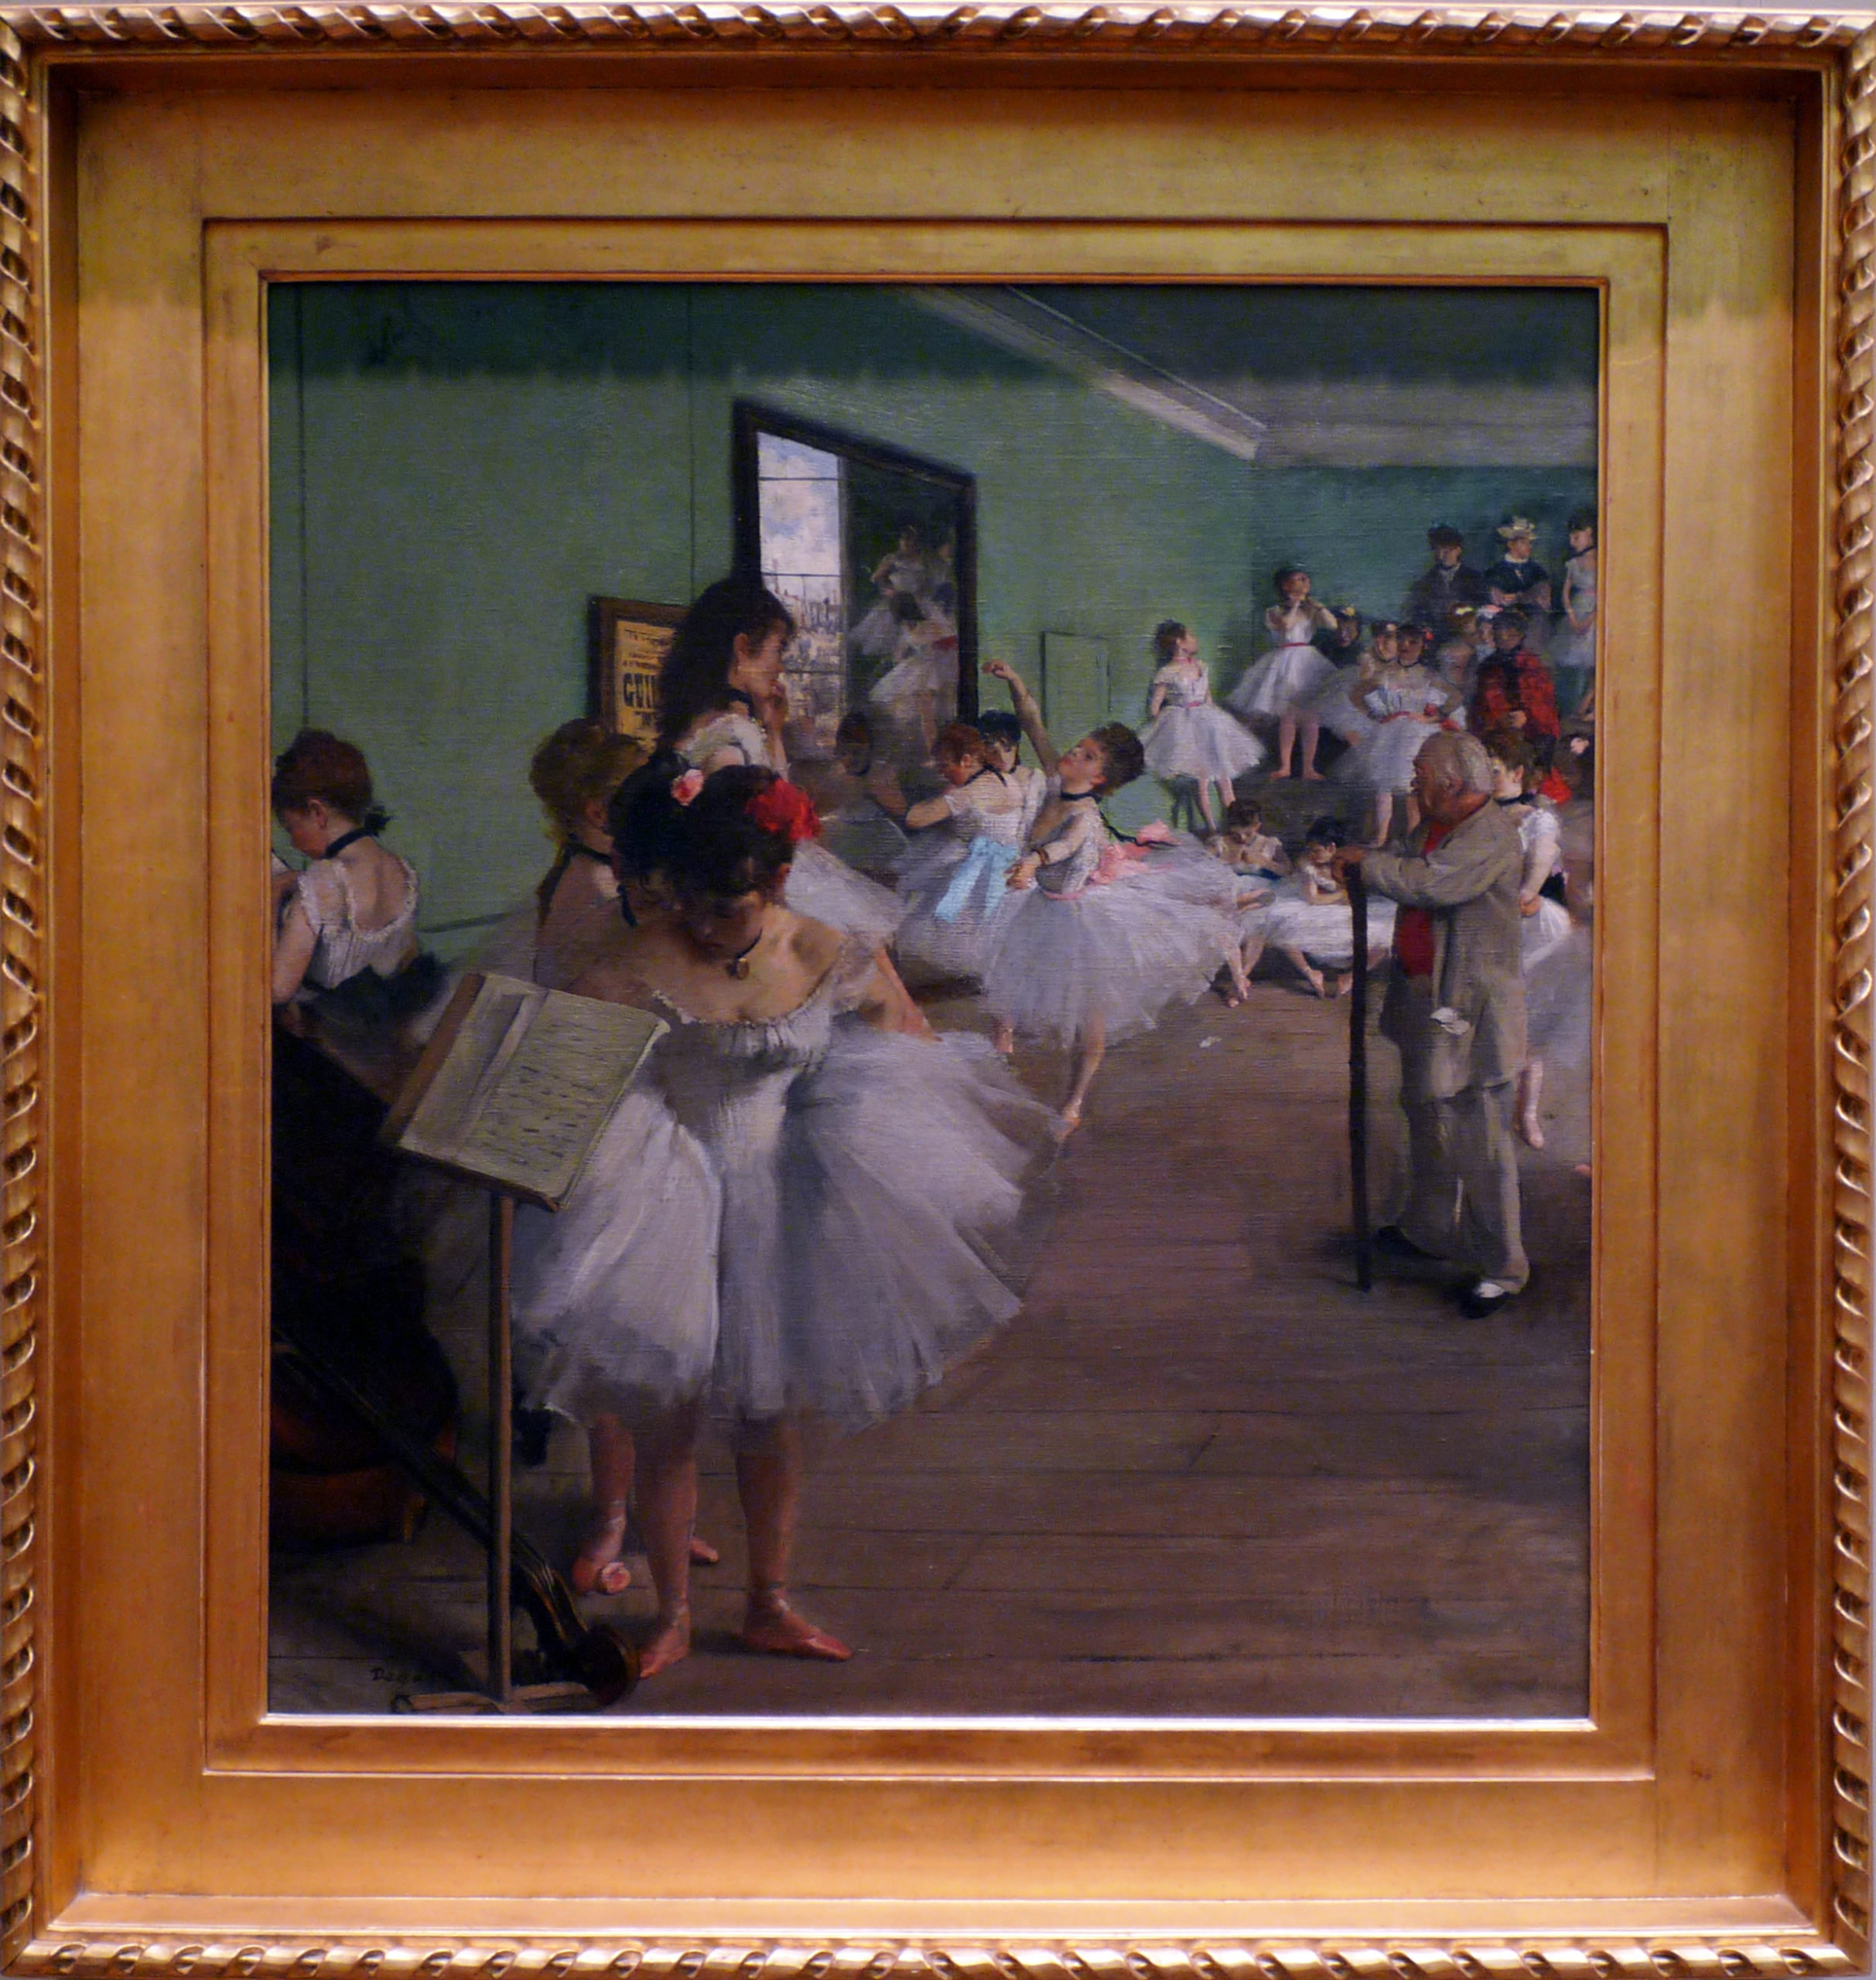 Edgar Degas, The Dance Class,, 1874, oil on canvas, (Metropolitan Museum of Art, New York)